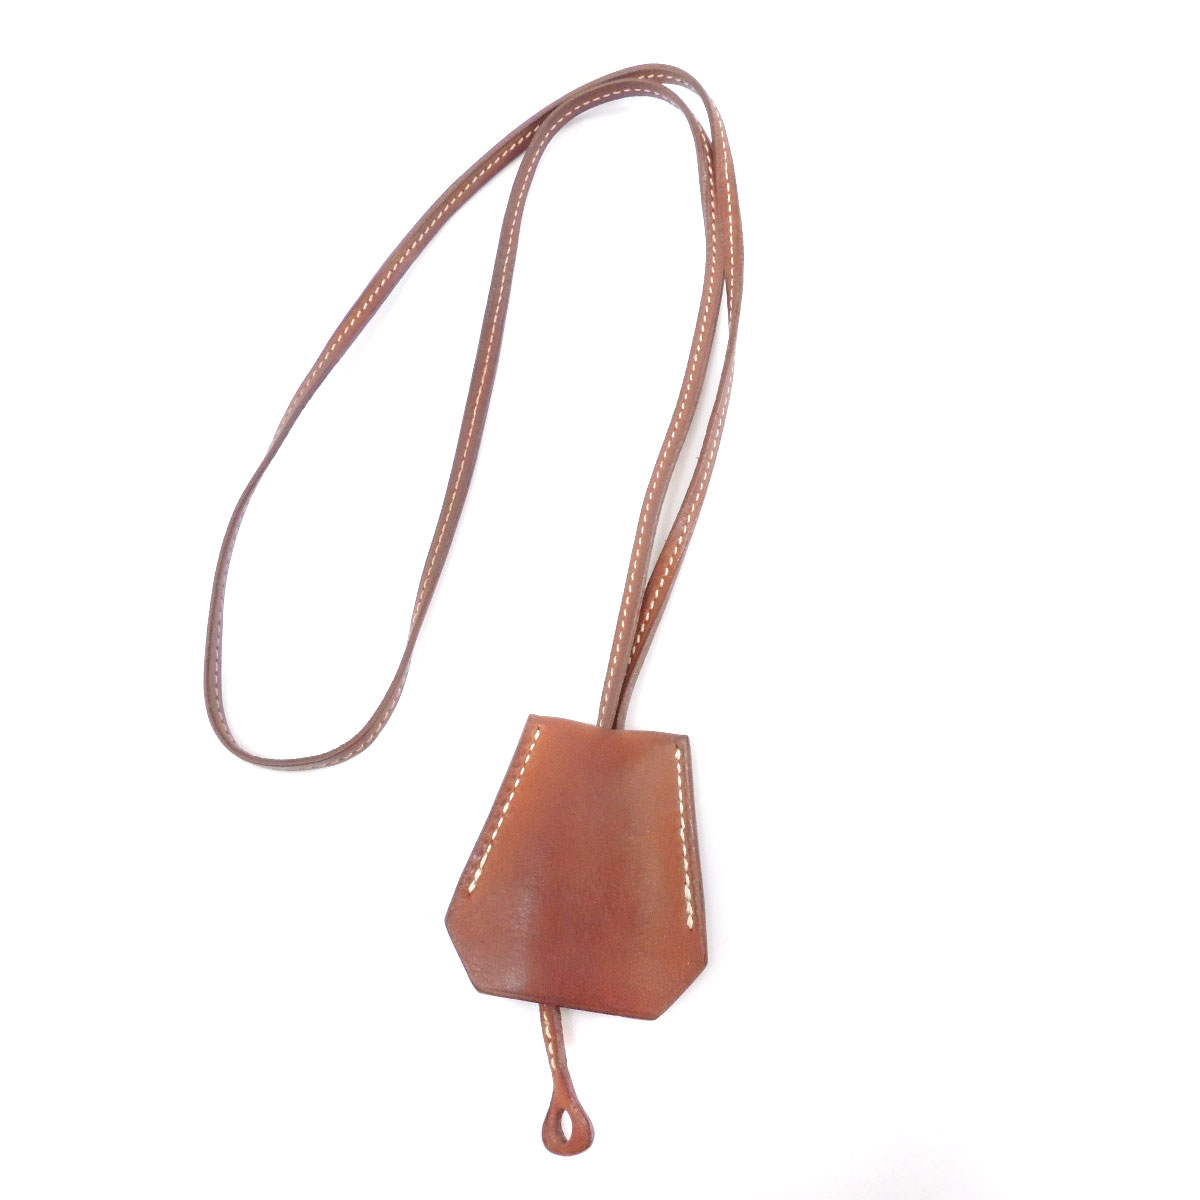 Key Necklace Holder - The Best Original Gemstone